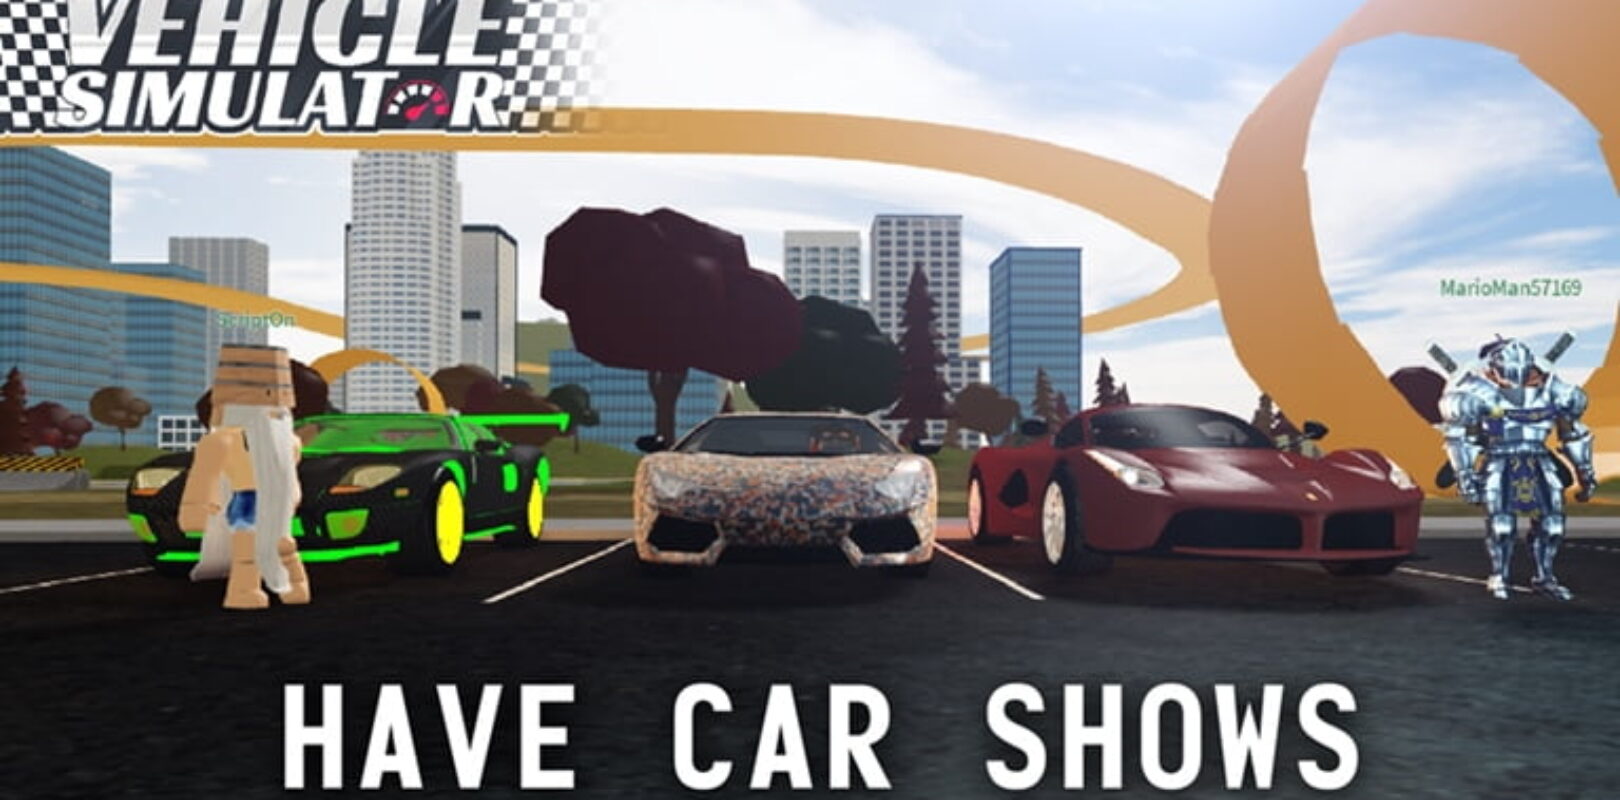 Vehicle Simulator Codes 2020 Pivotal Gamers - roblox vehicle simulator codes 2019